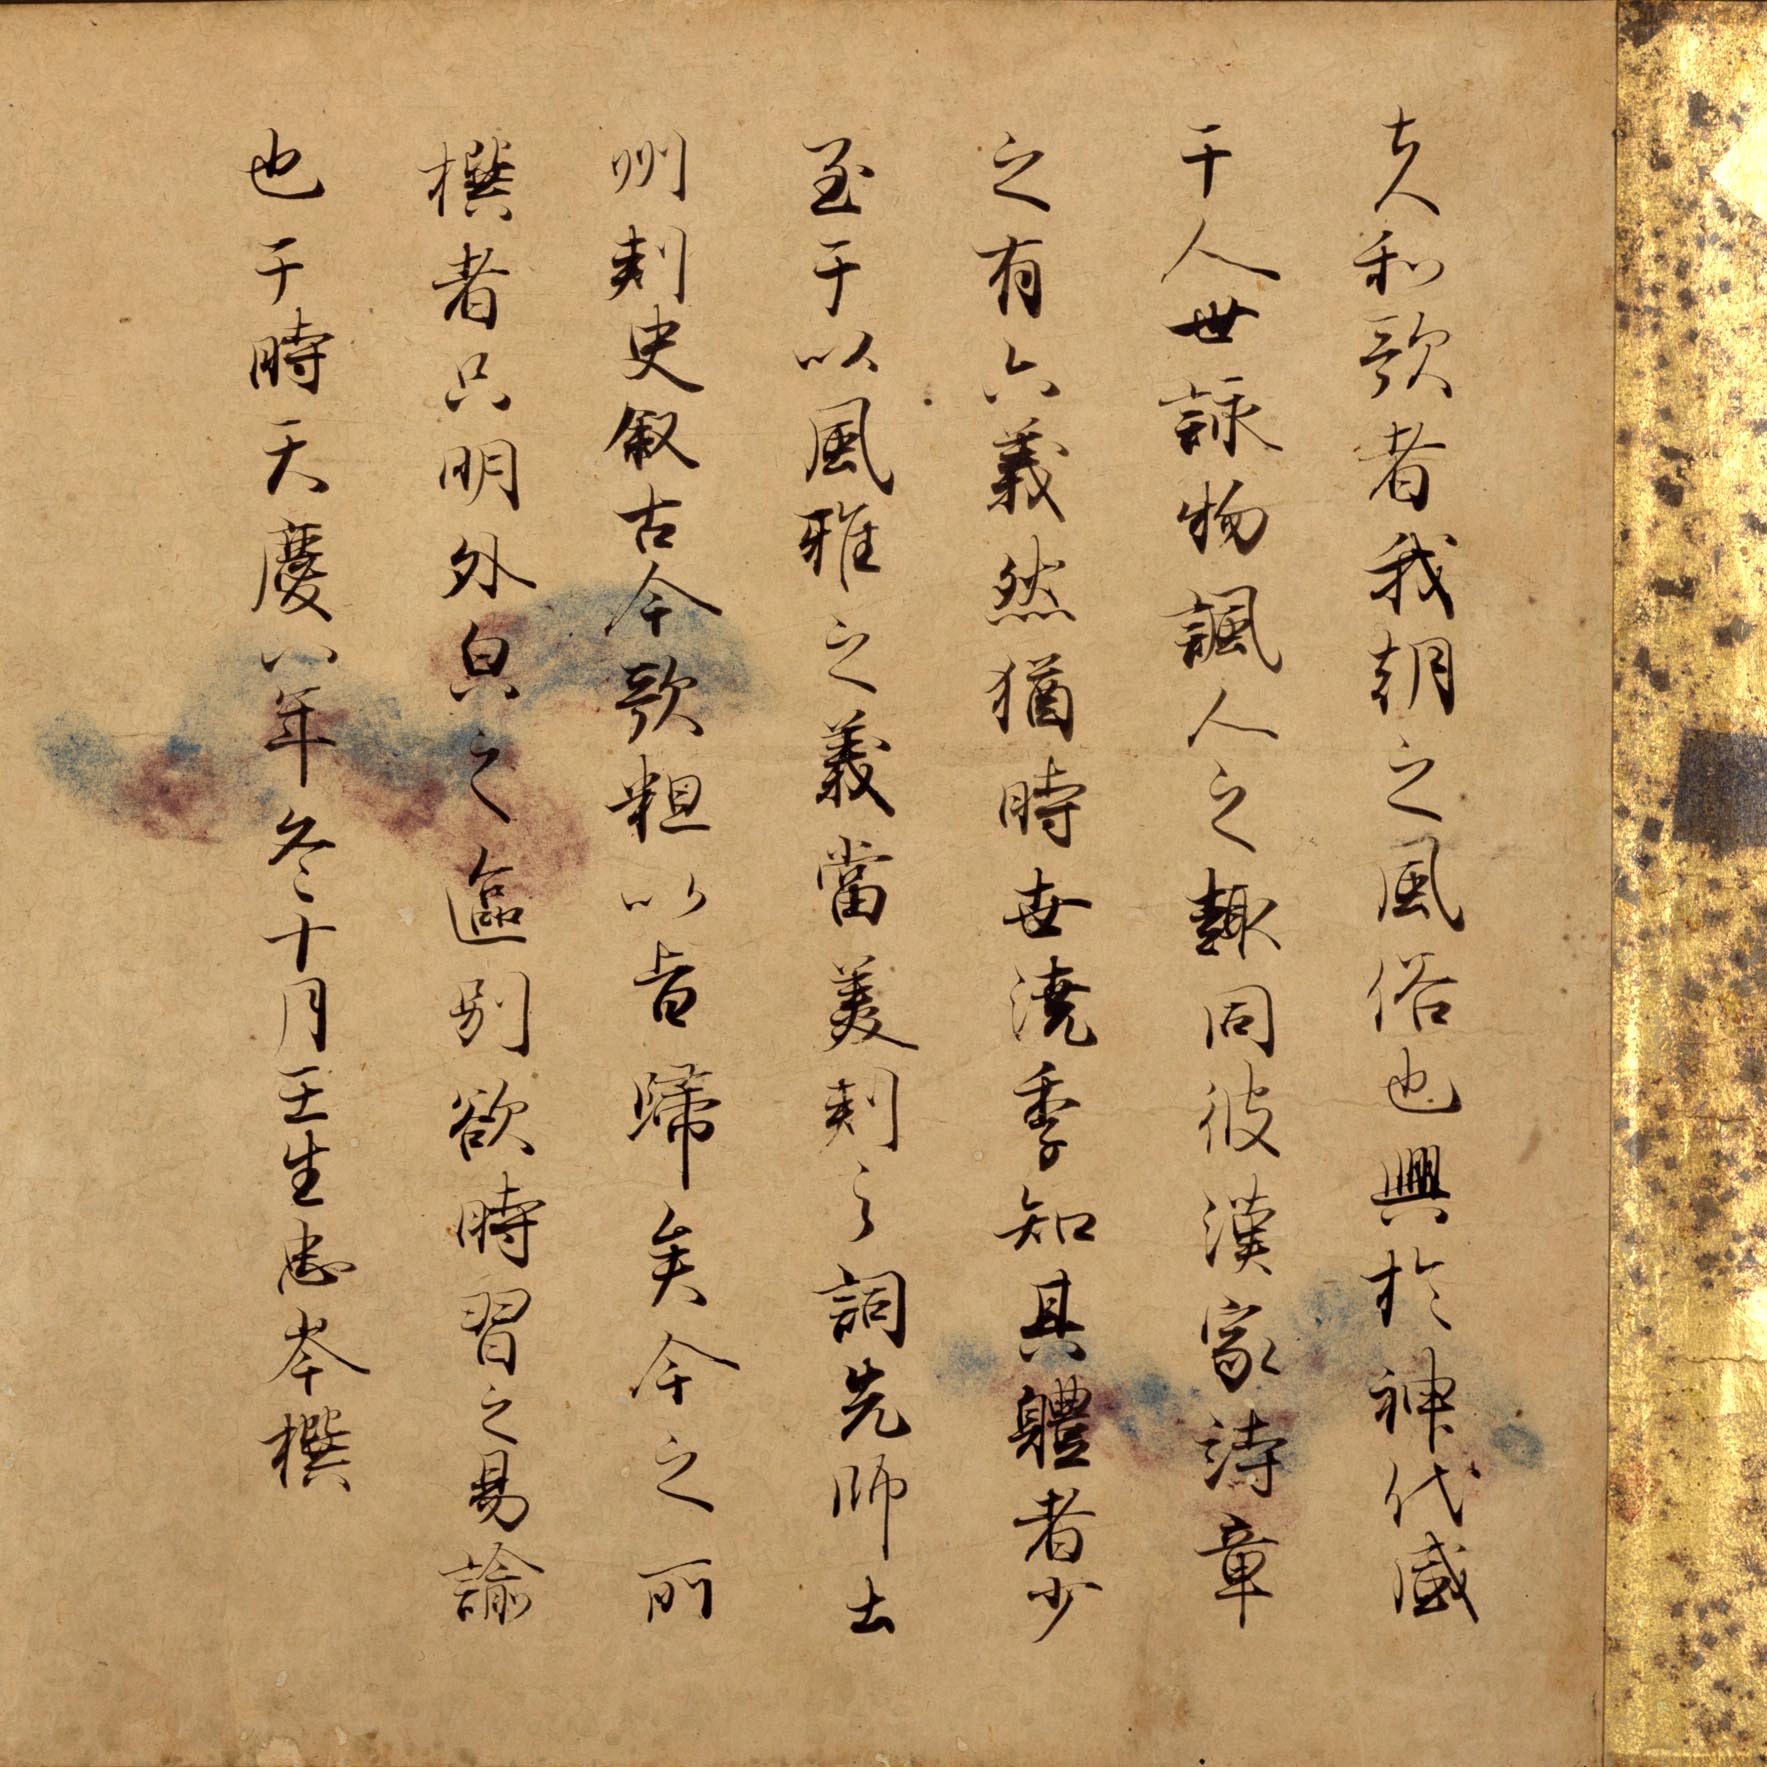 Image of "Wakatai jisshu (Treatise on poetry), Heian period, 11th century (National Treasure)"